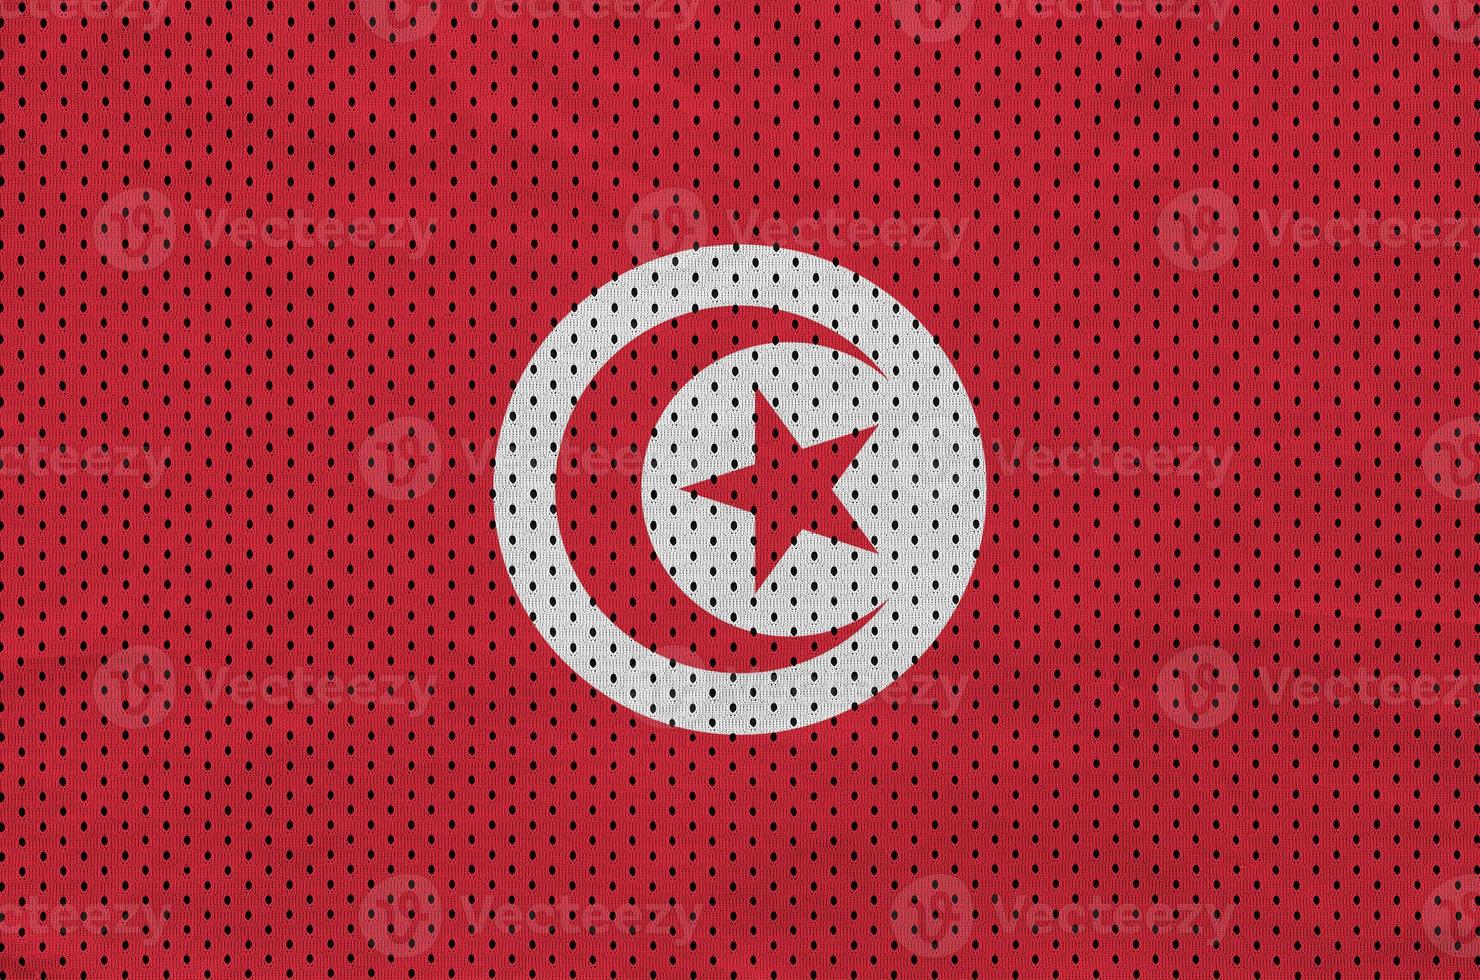 Tunisia flag printed on a polyester nylon sportswear mesh fabric photo